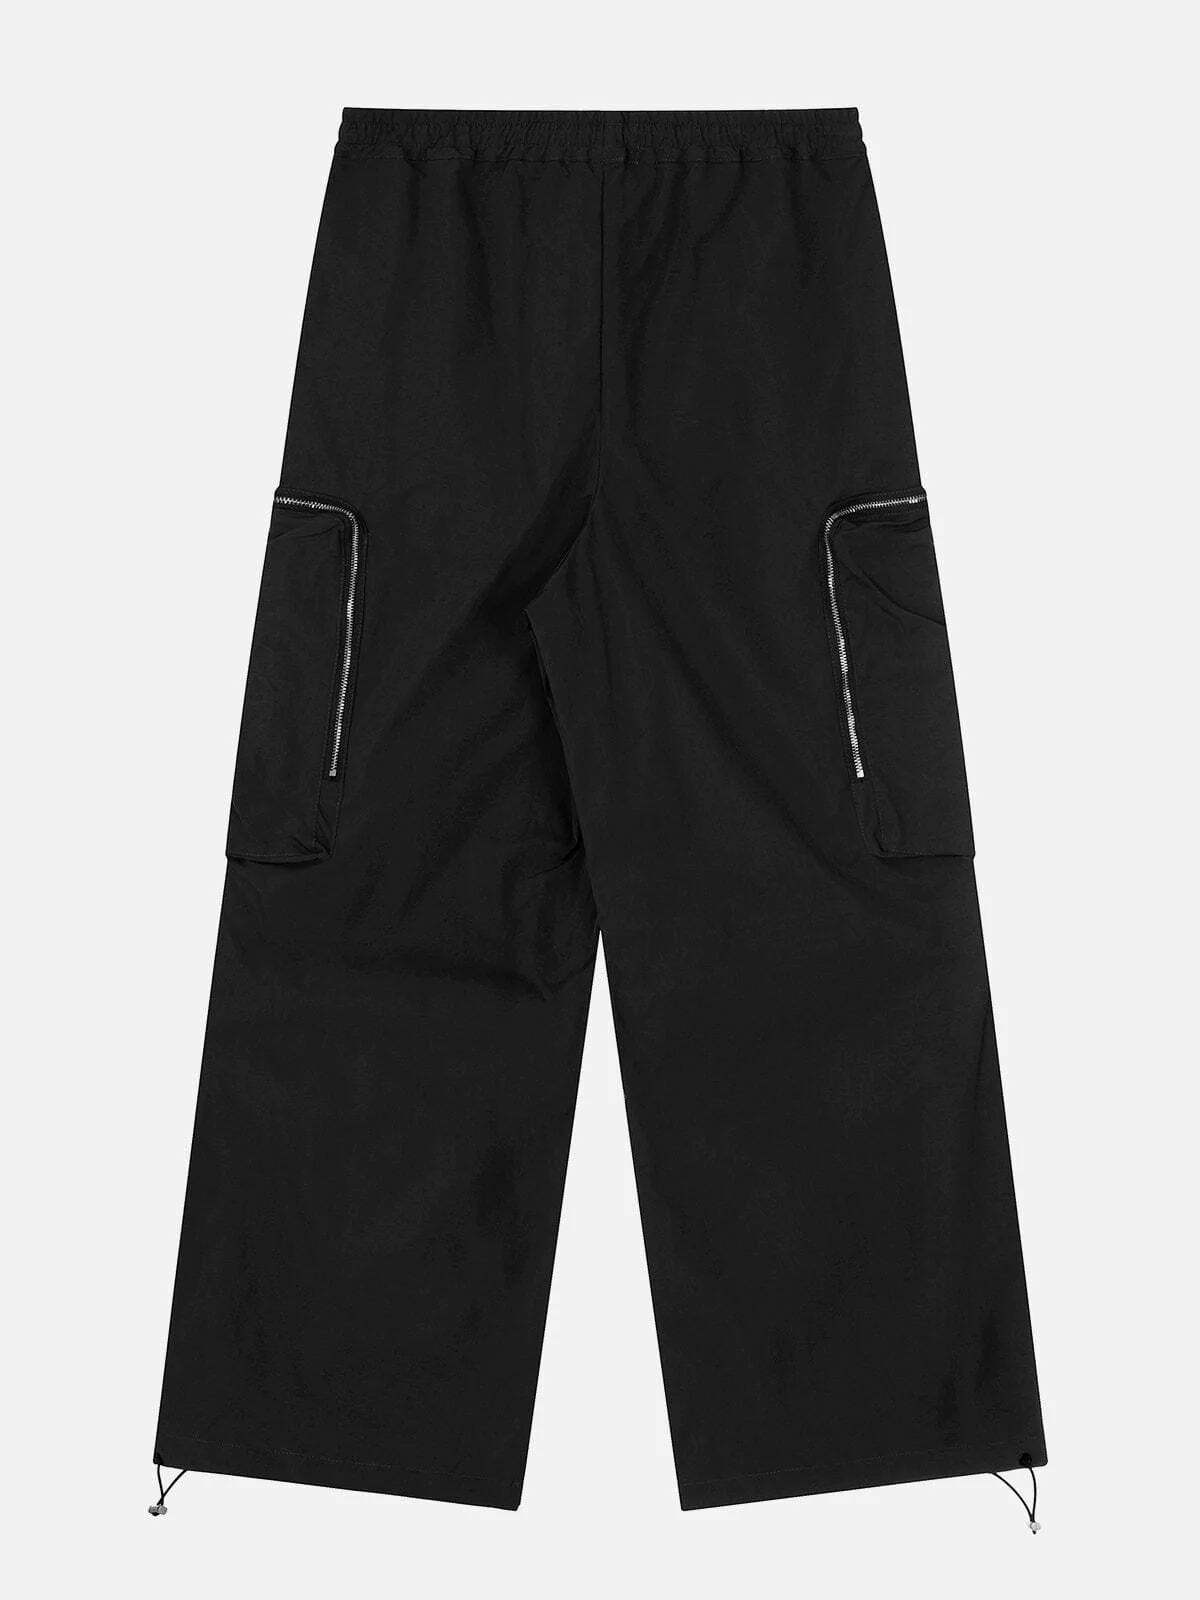 functional big pocket pants urban streetwear 2226